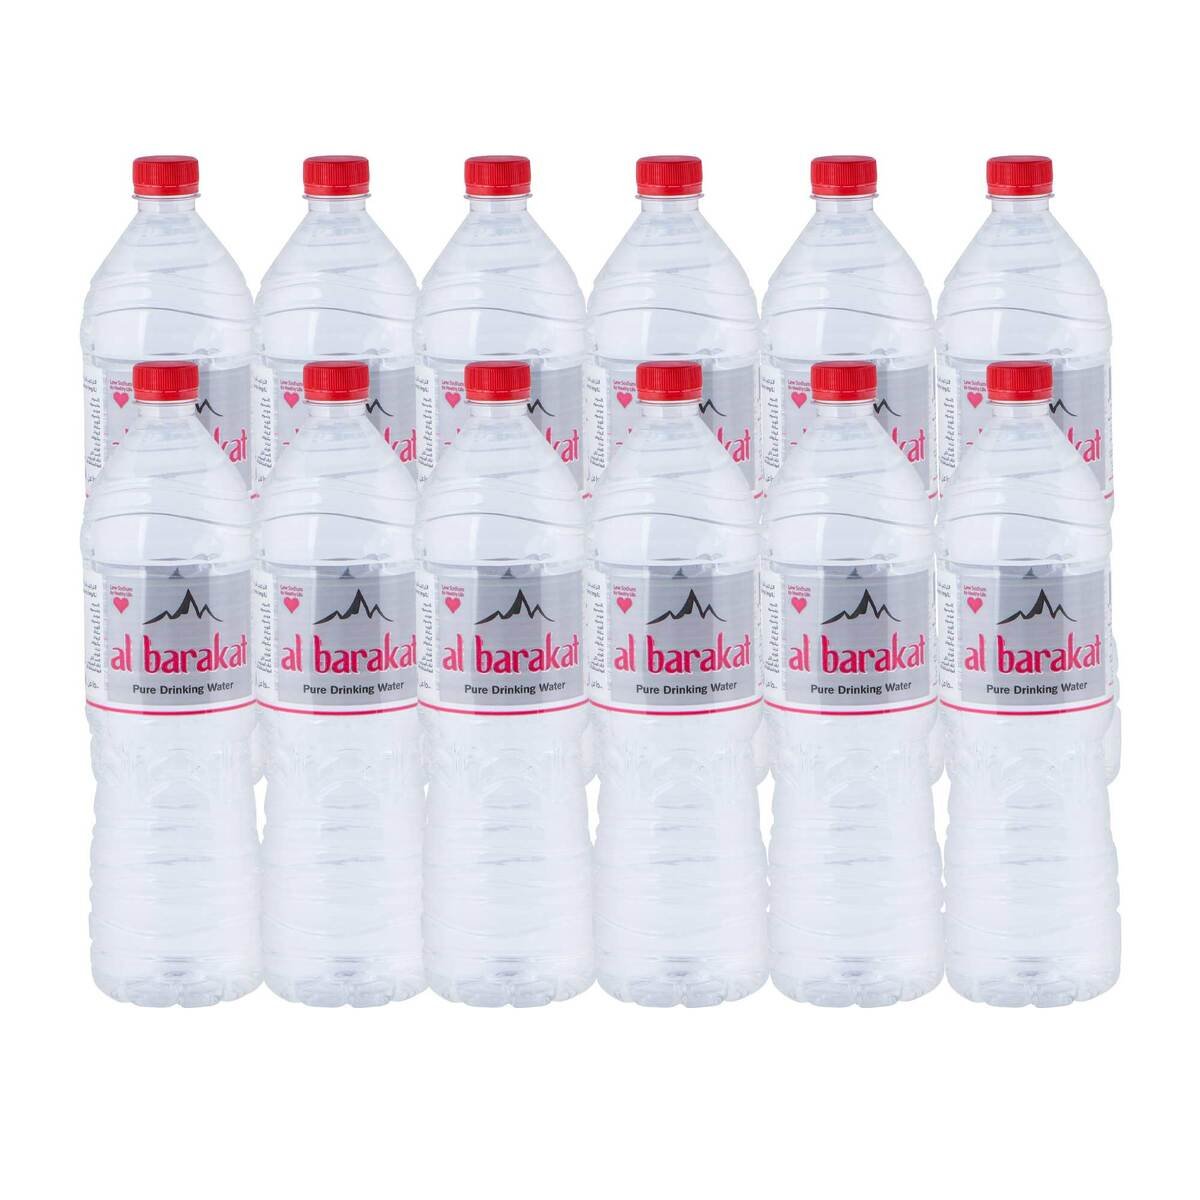 Al Barakat Pure Drinking Water 12 x 1.5 Litre